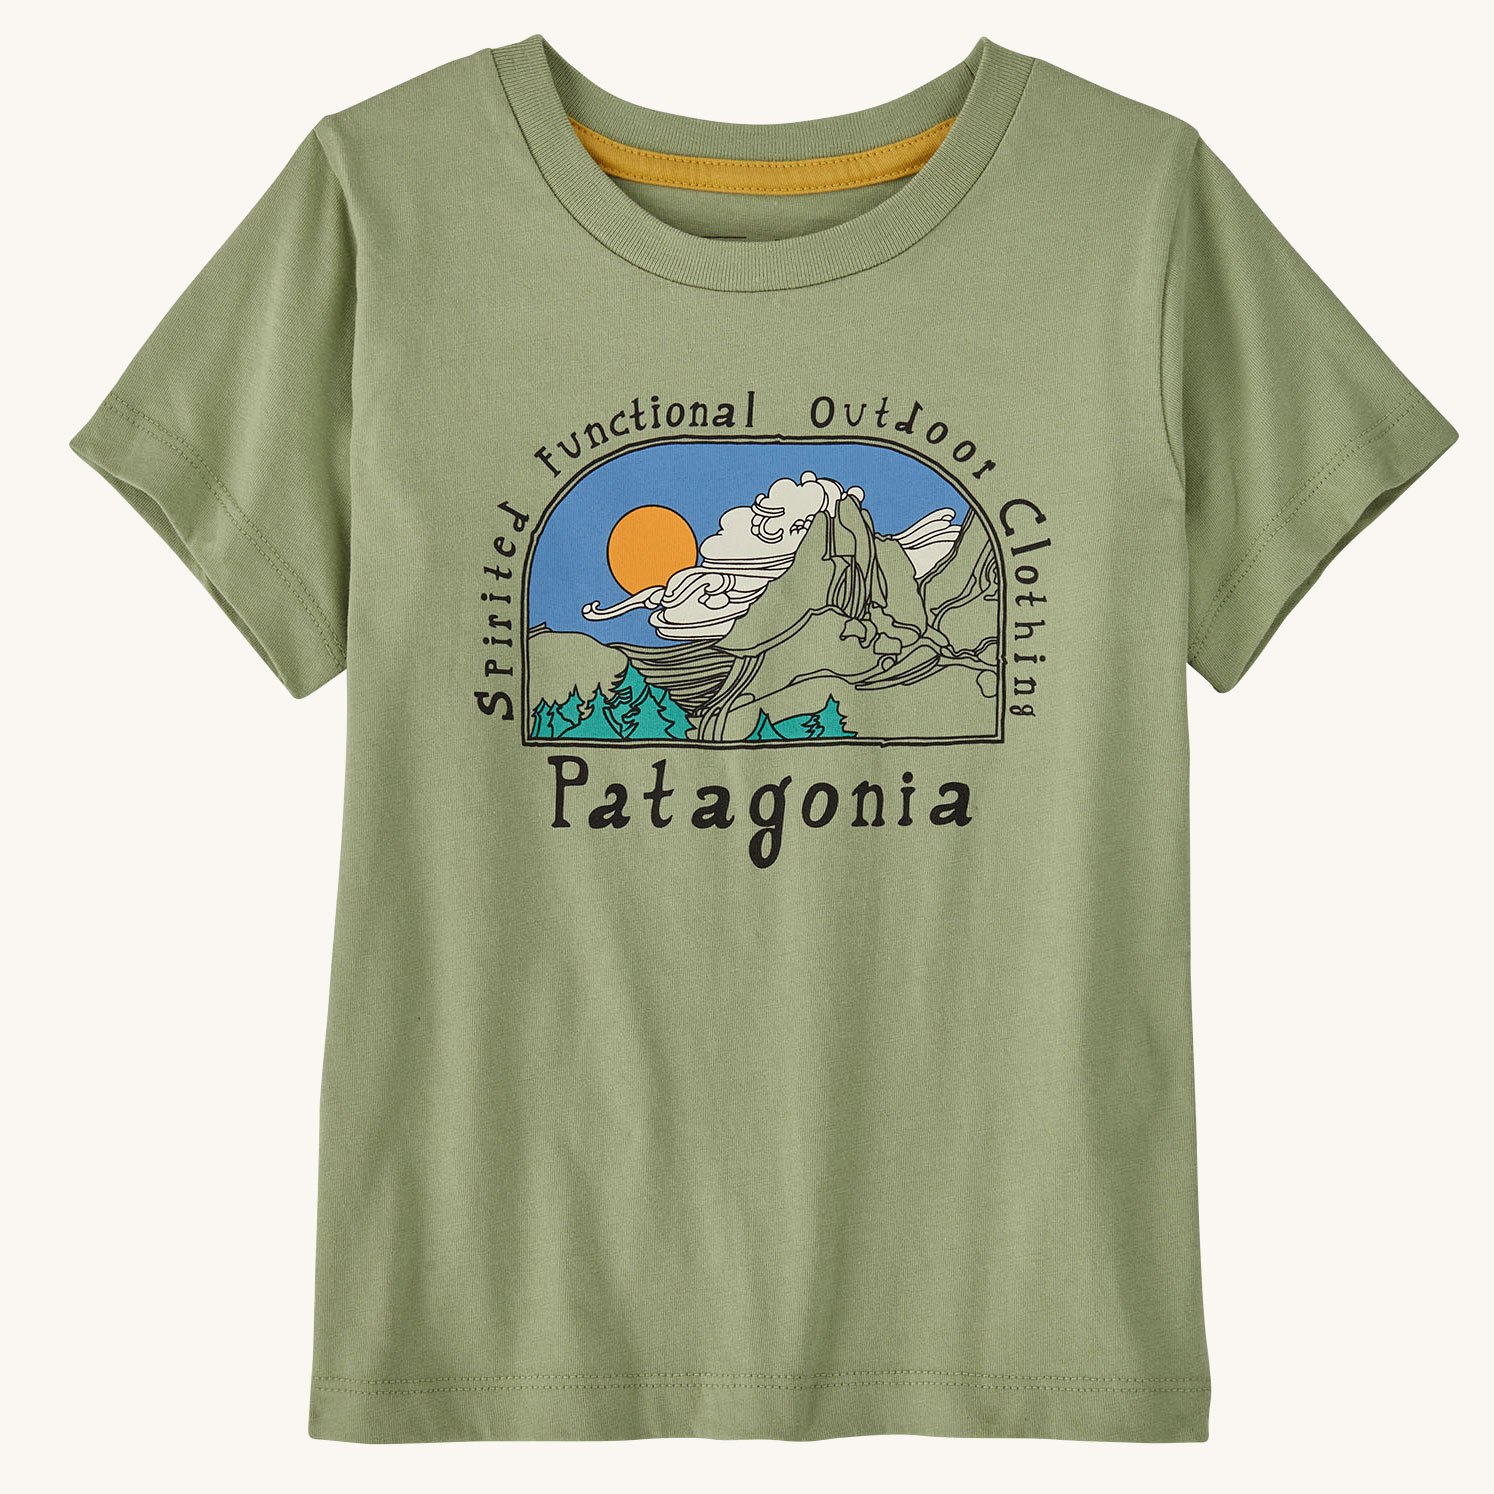 Patagonia Regenerative Organic Cotton Little Kids Graphic T-Shirt